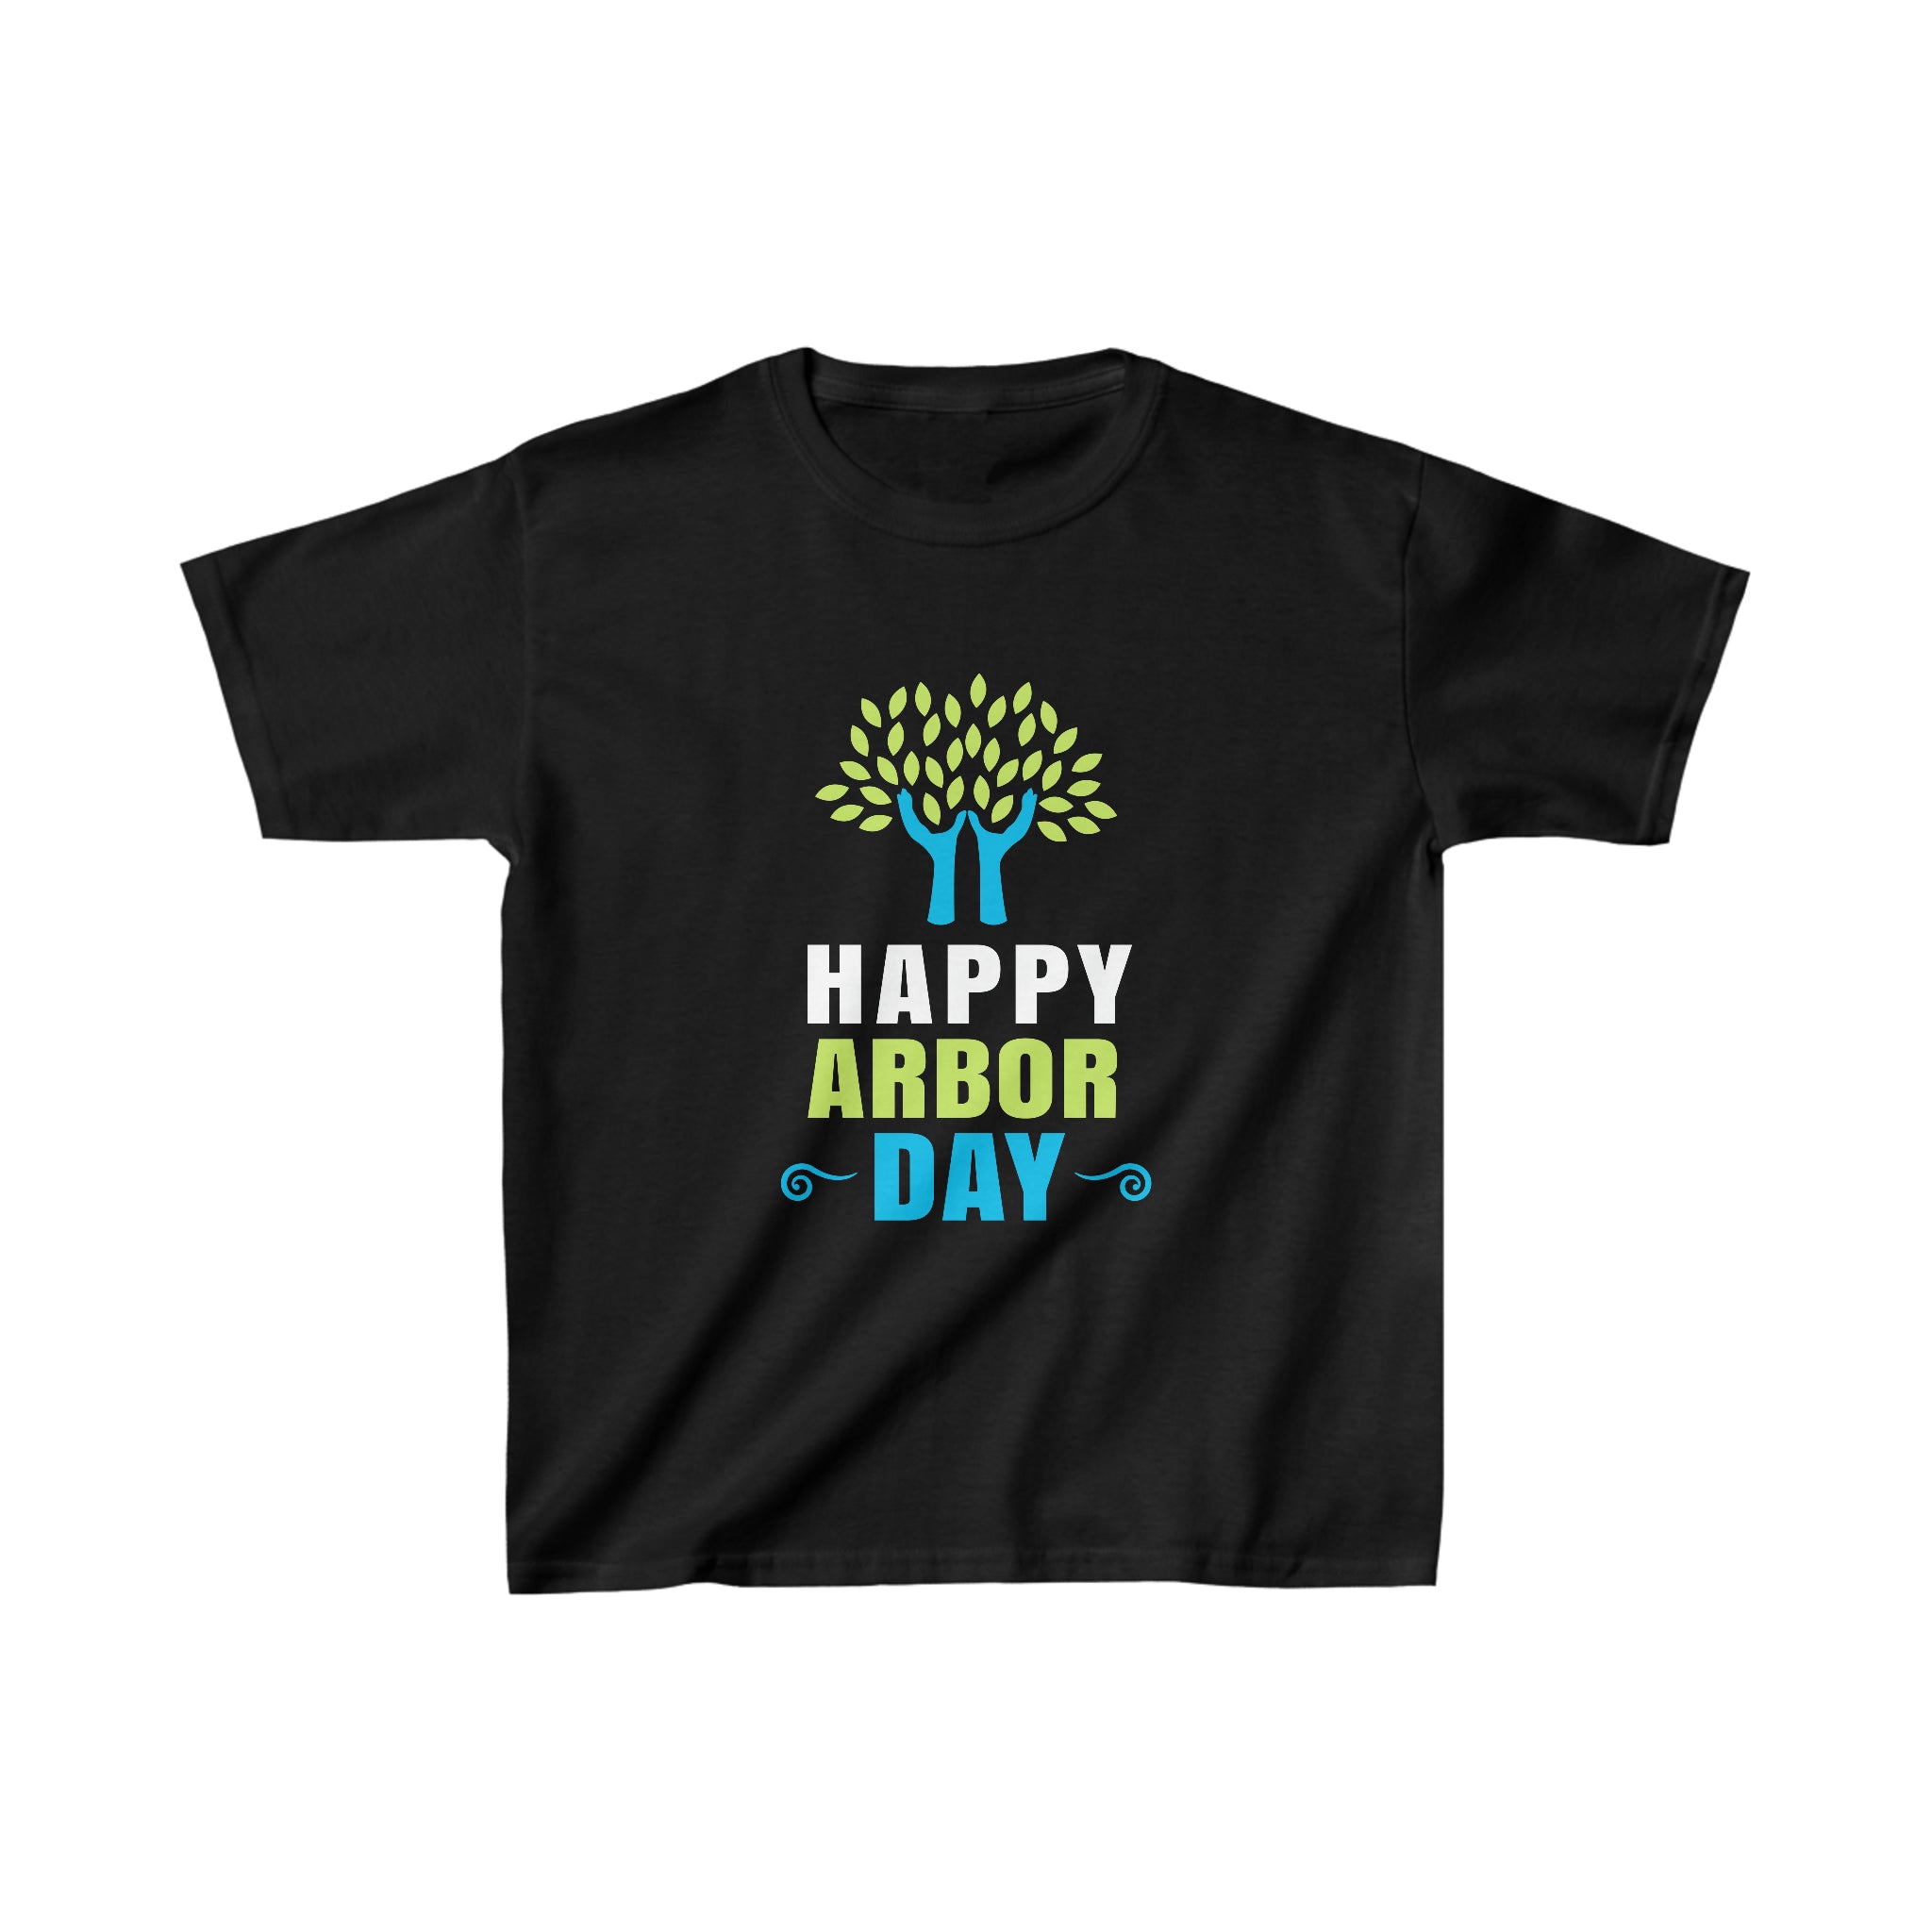 Happy Arbor Day Shirts Earth Day Shirts Save the Planet Boys Tshirts